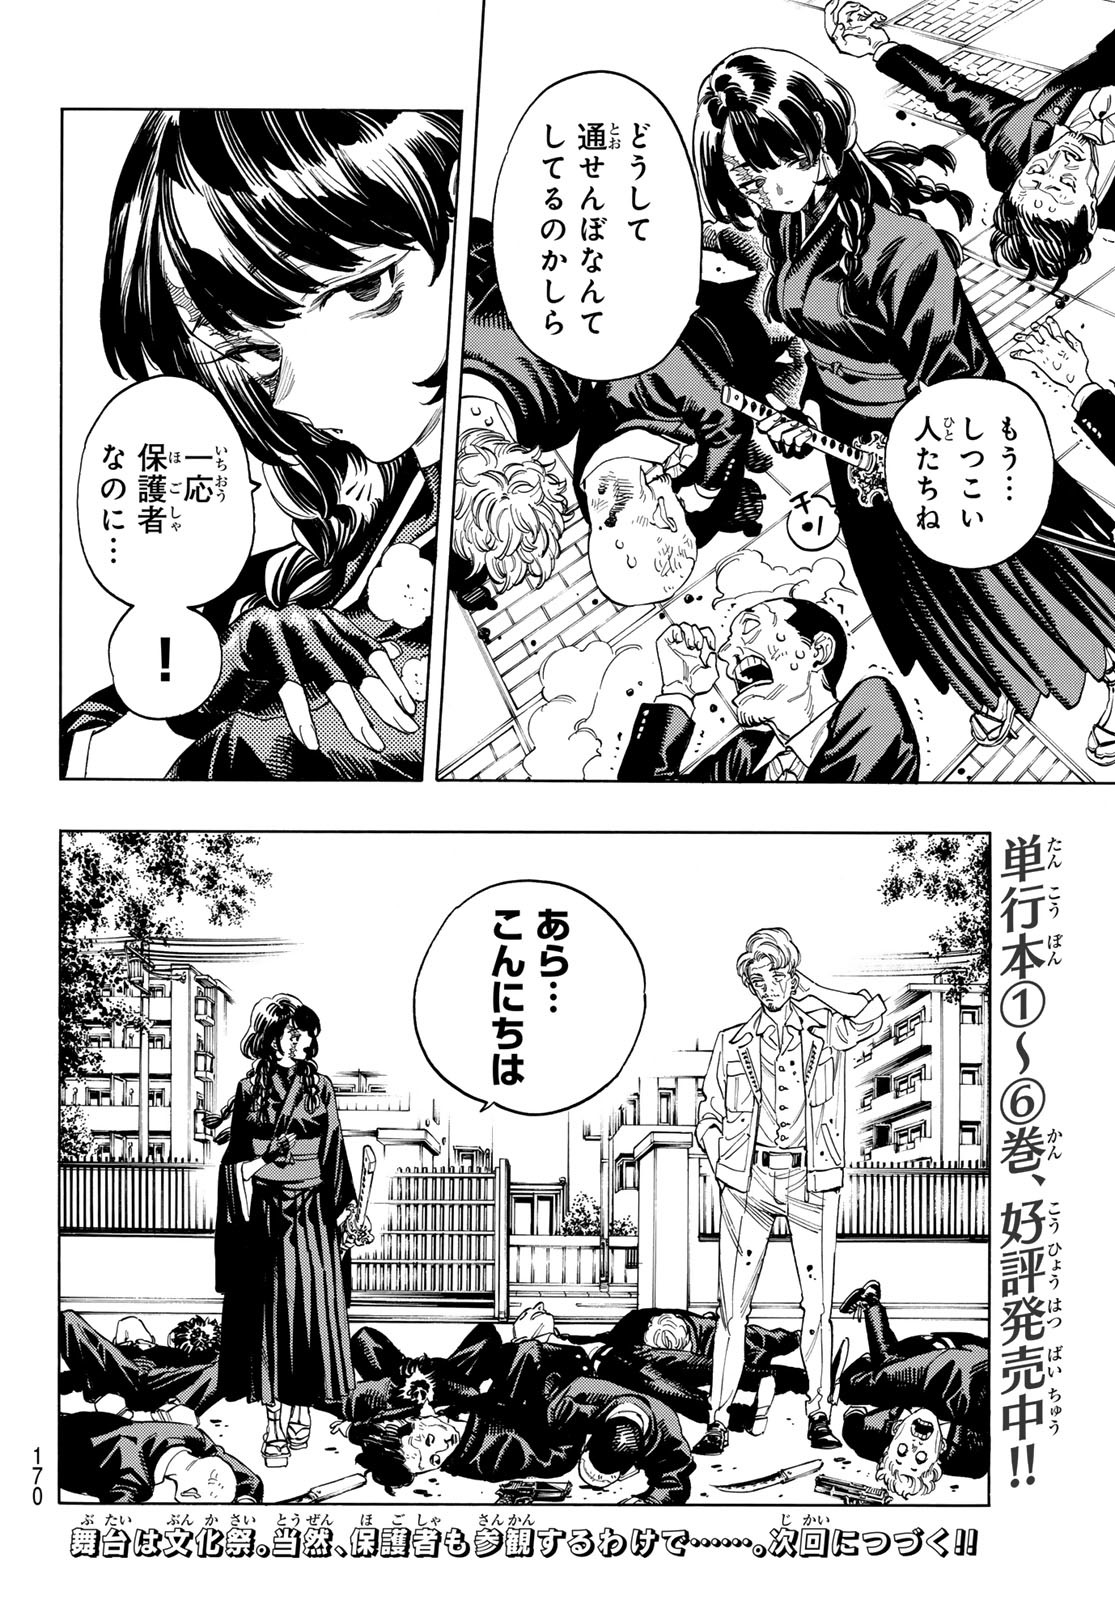 Akabane Honeko no Bodyguard - Chapter 60 - Page 20